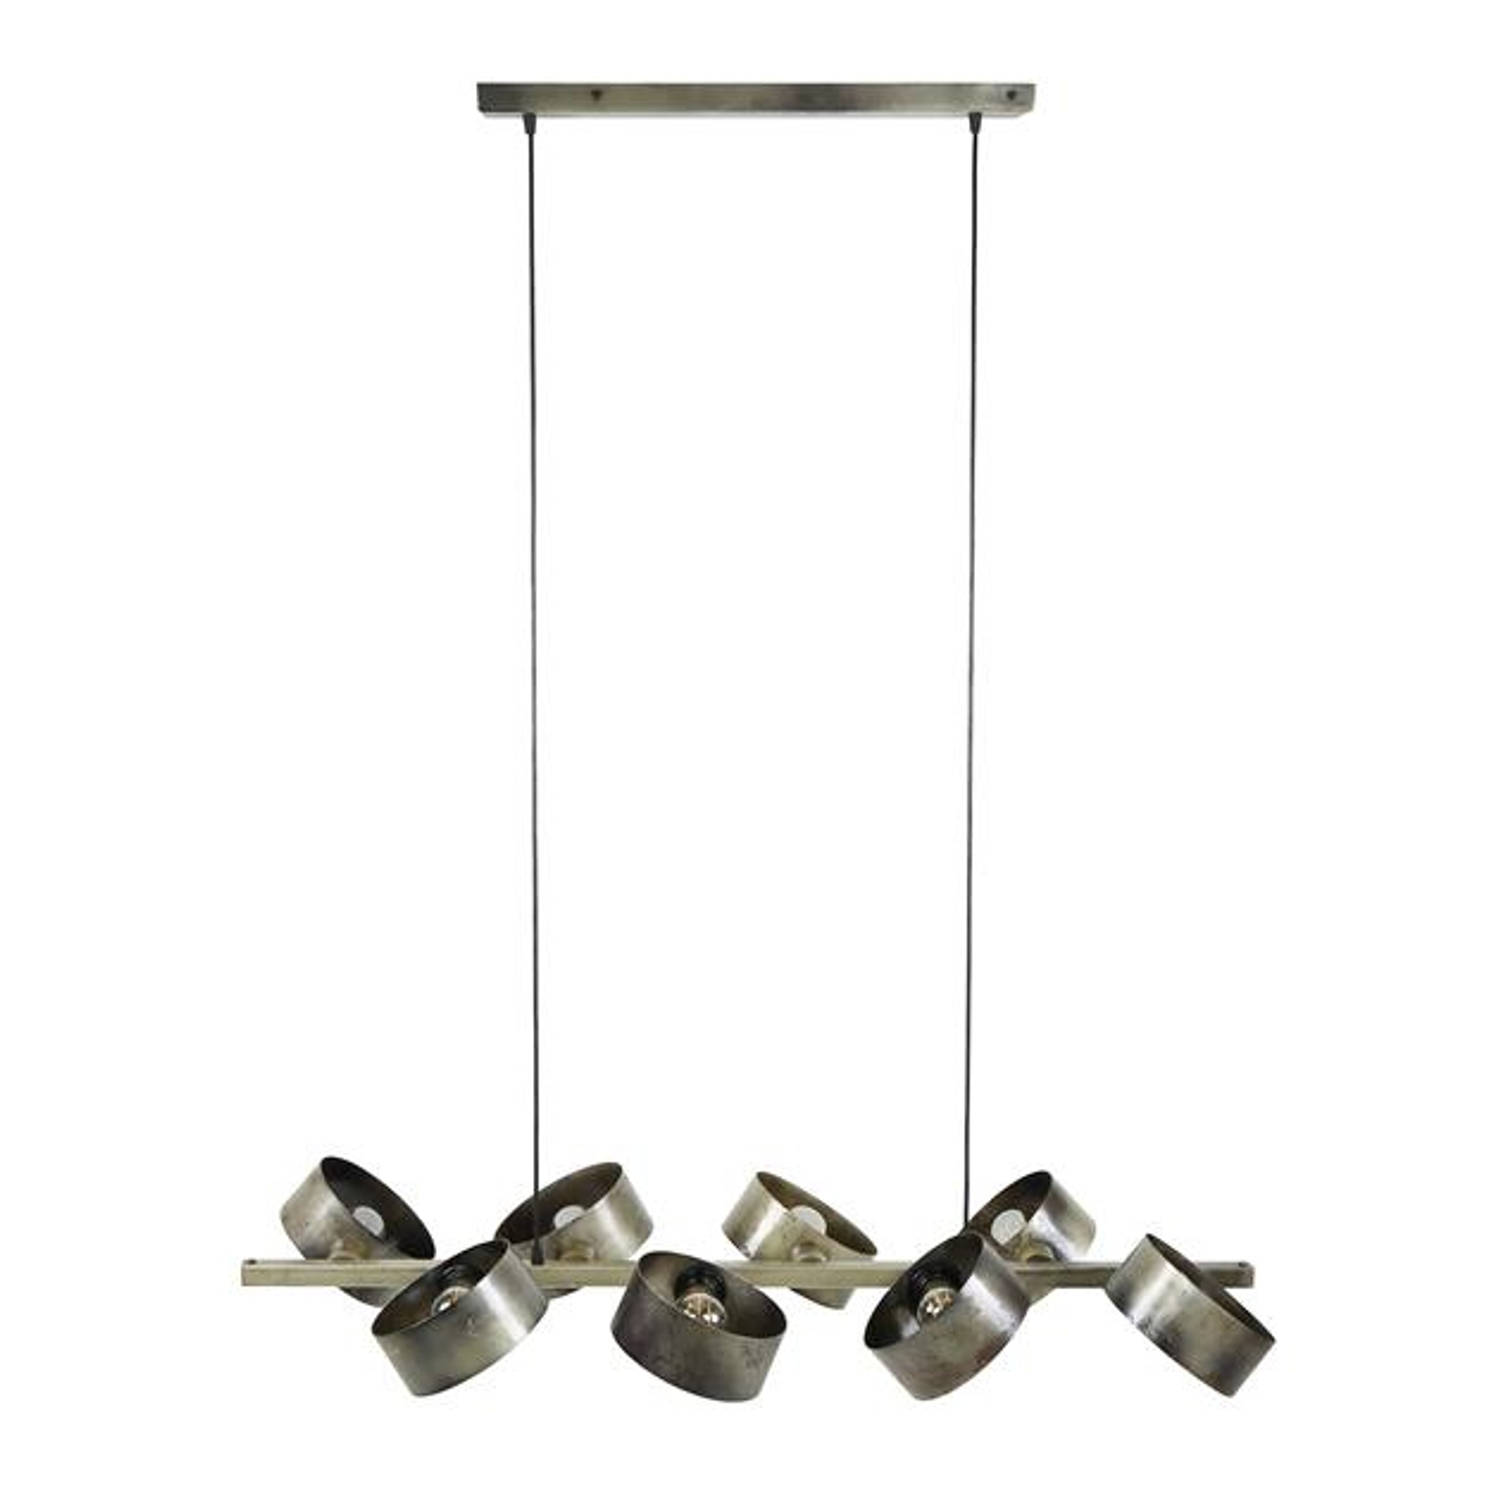 Giga Meubel Gm Hanglamp Metaal - 17x115x150cm - Zilver - Lamp Rotar